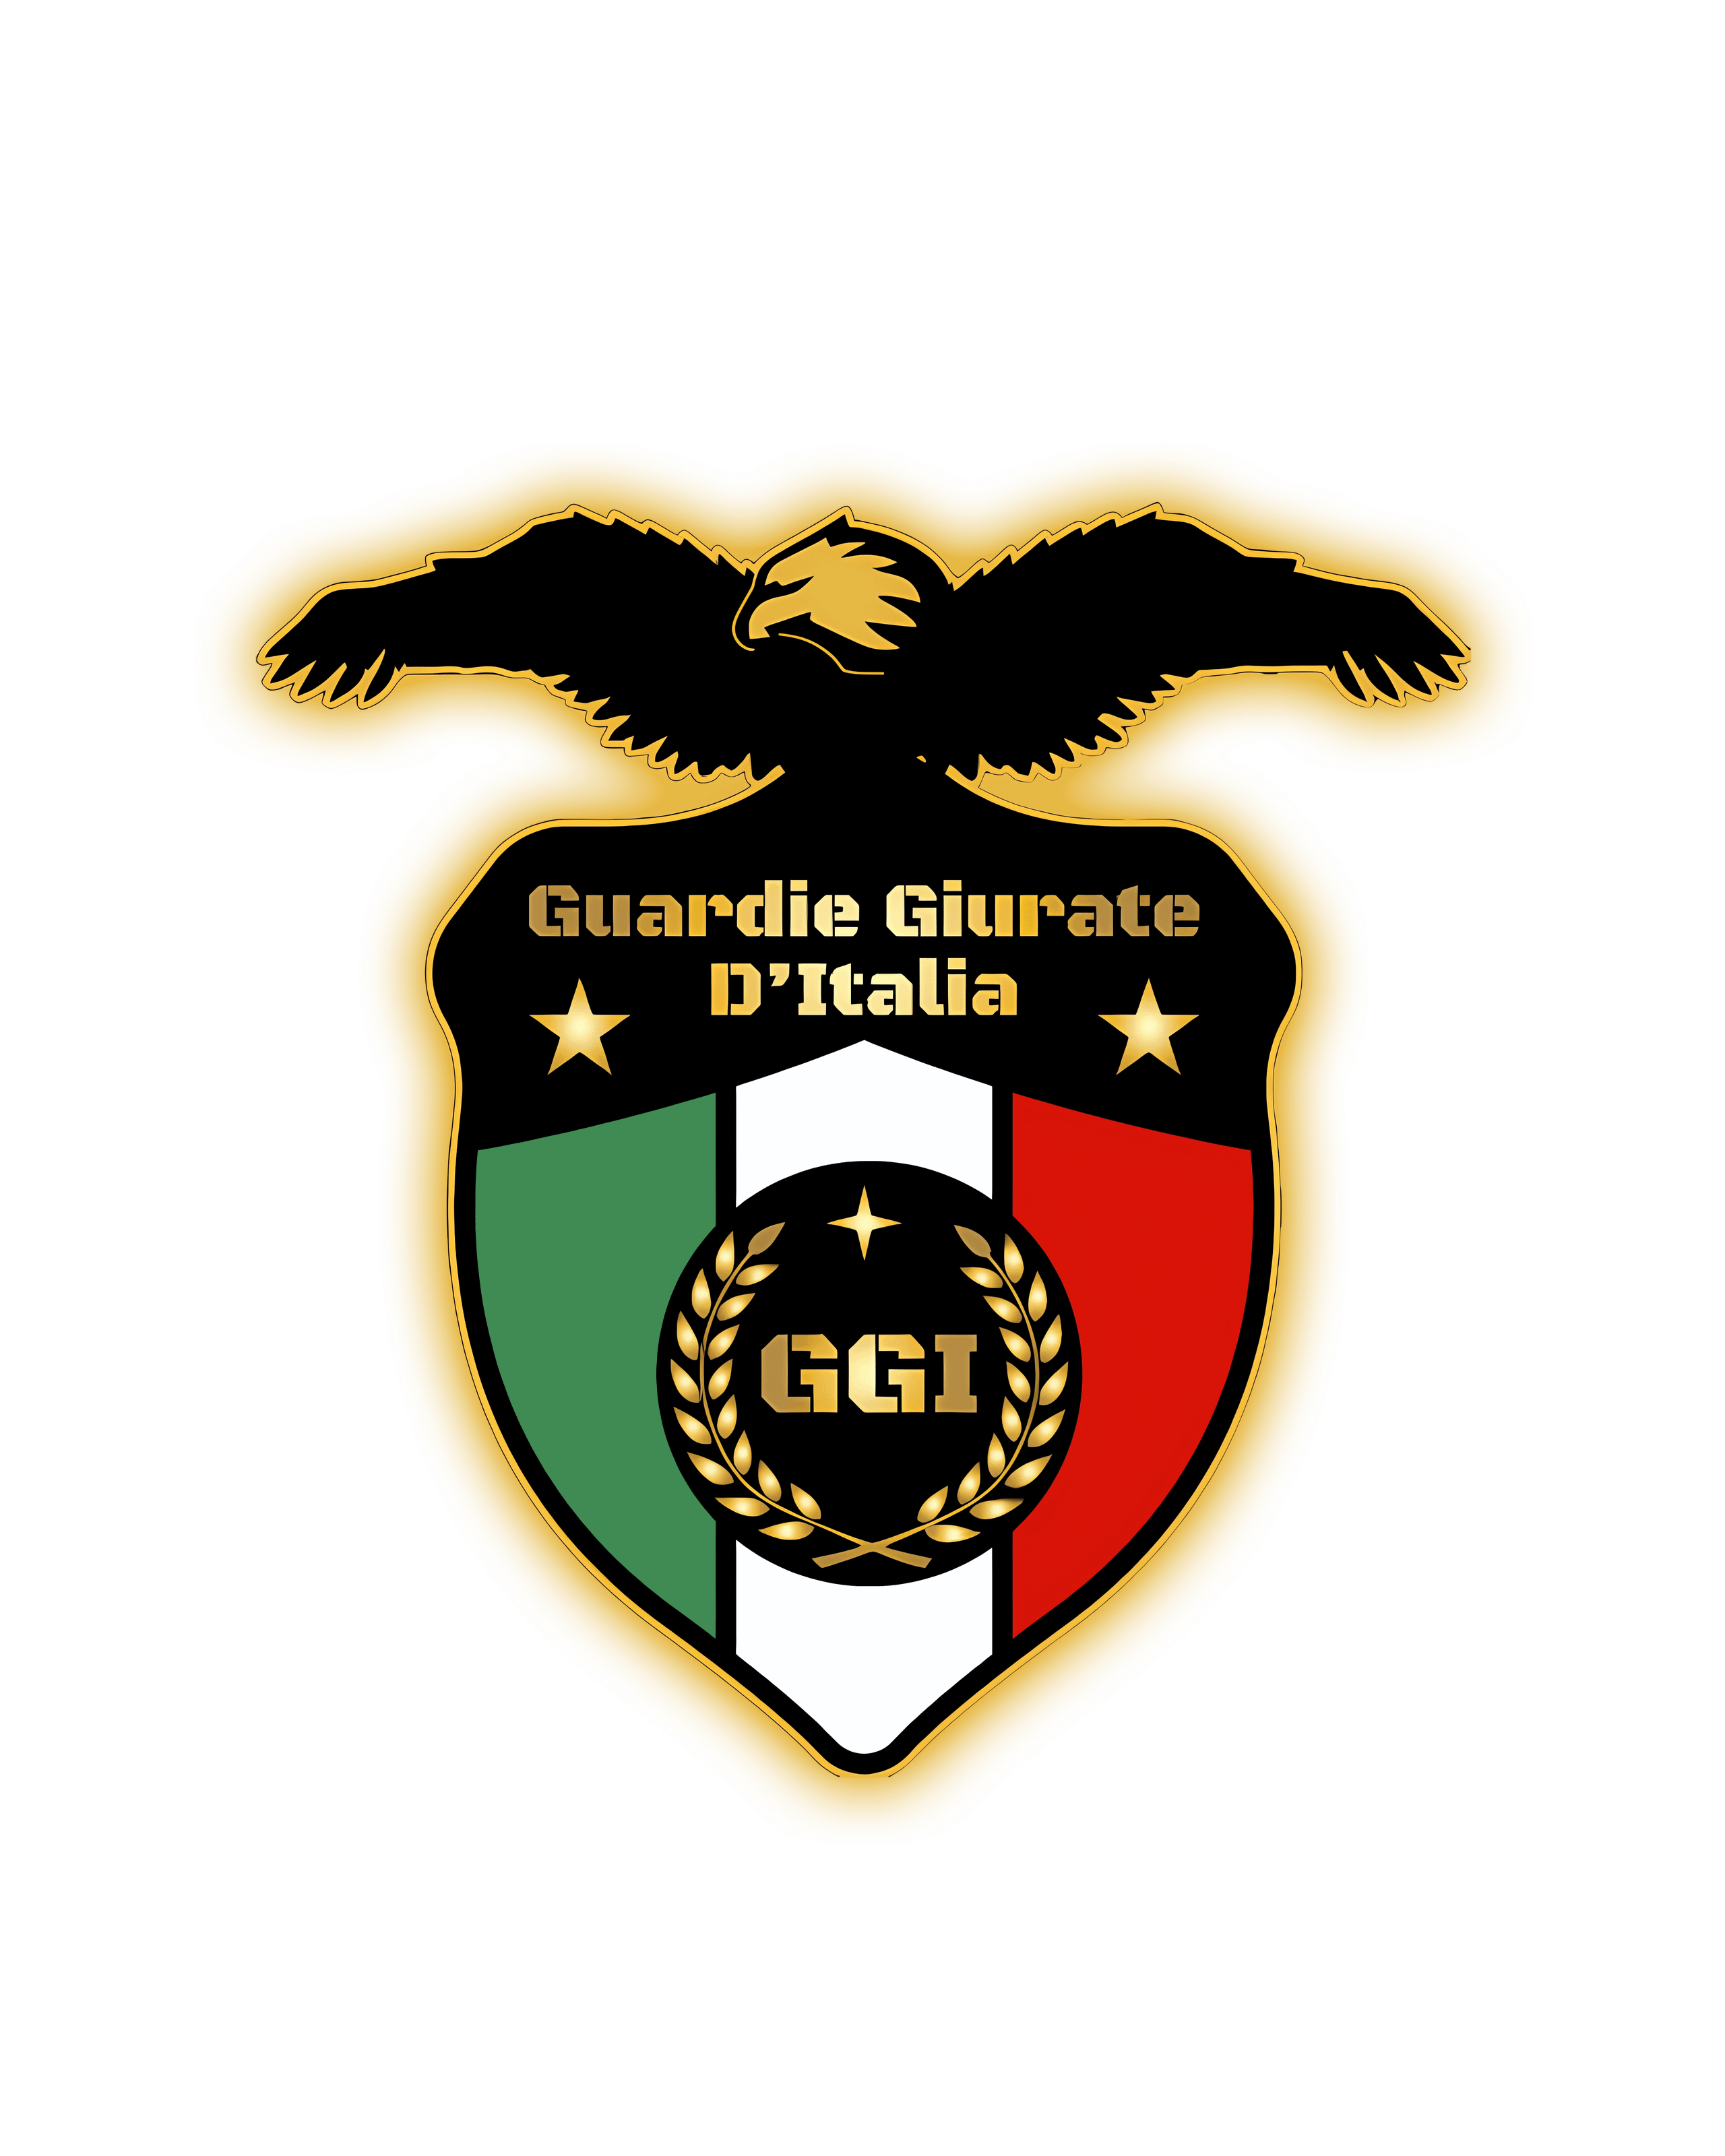 GUARDIE GIURATE D’ITALIA